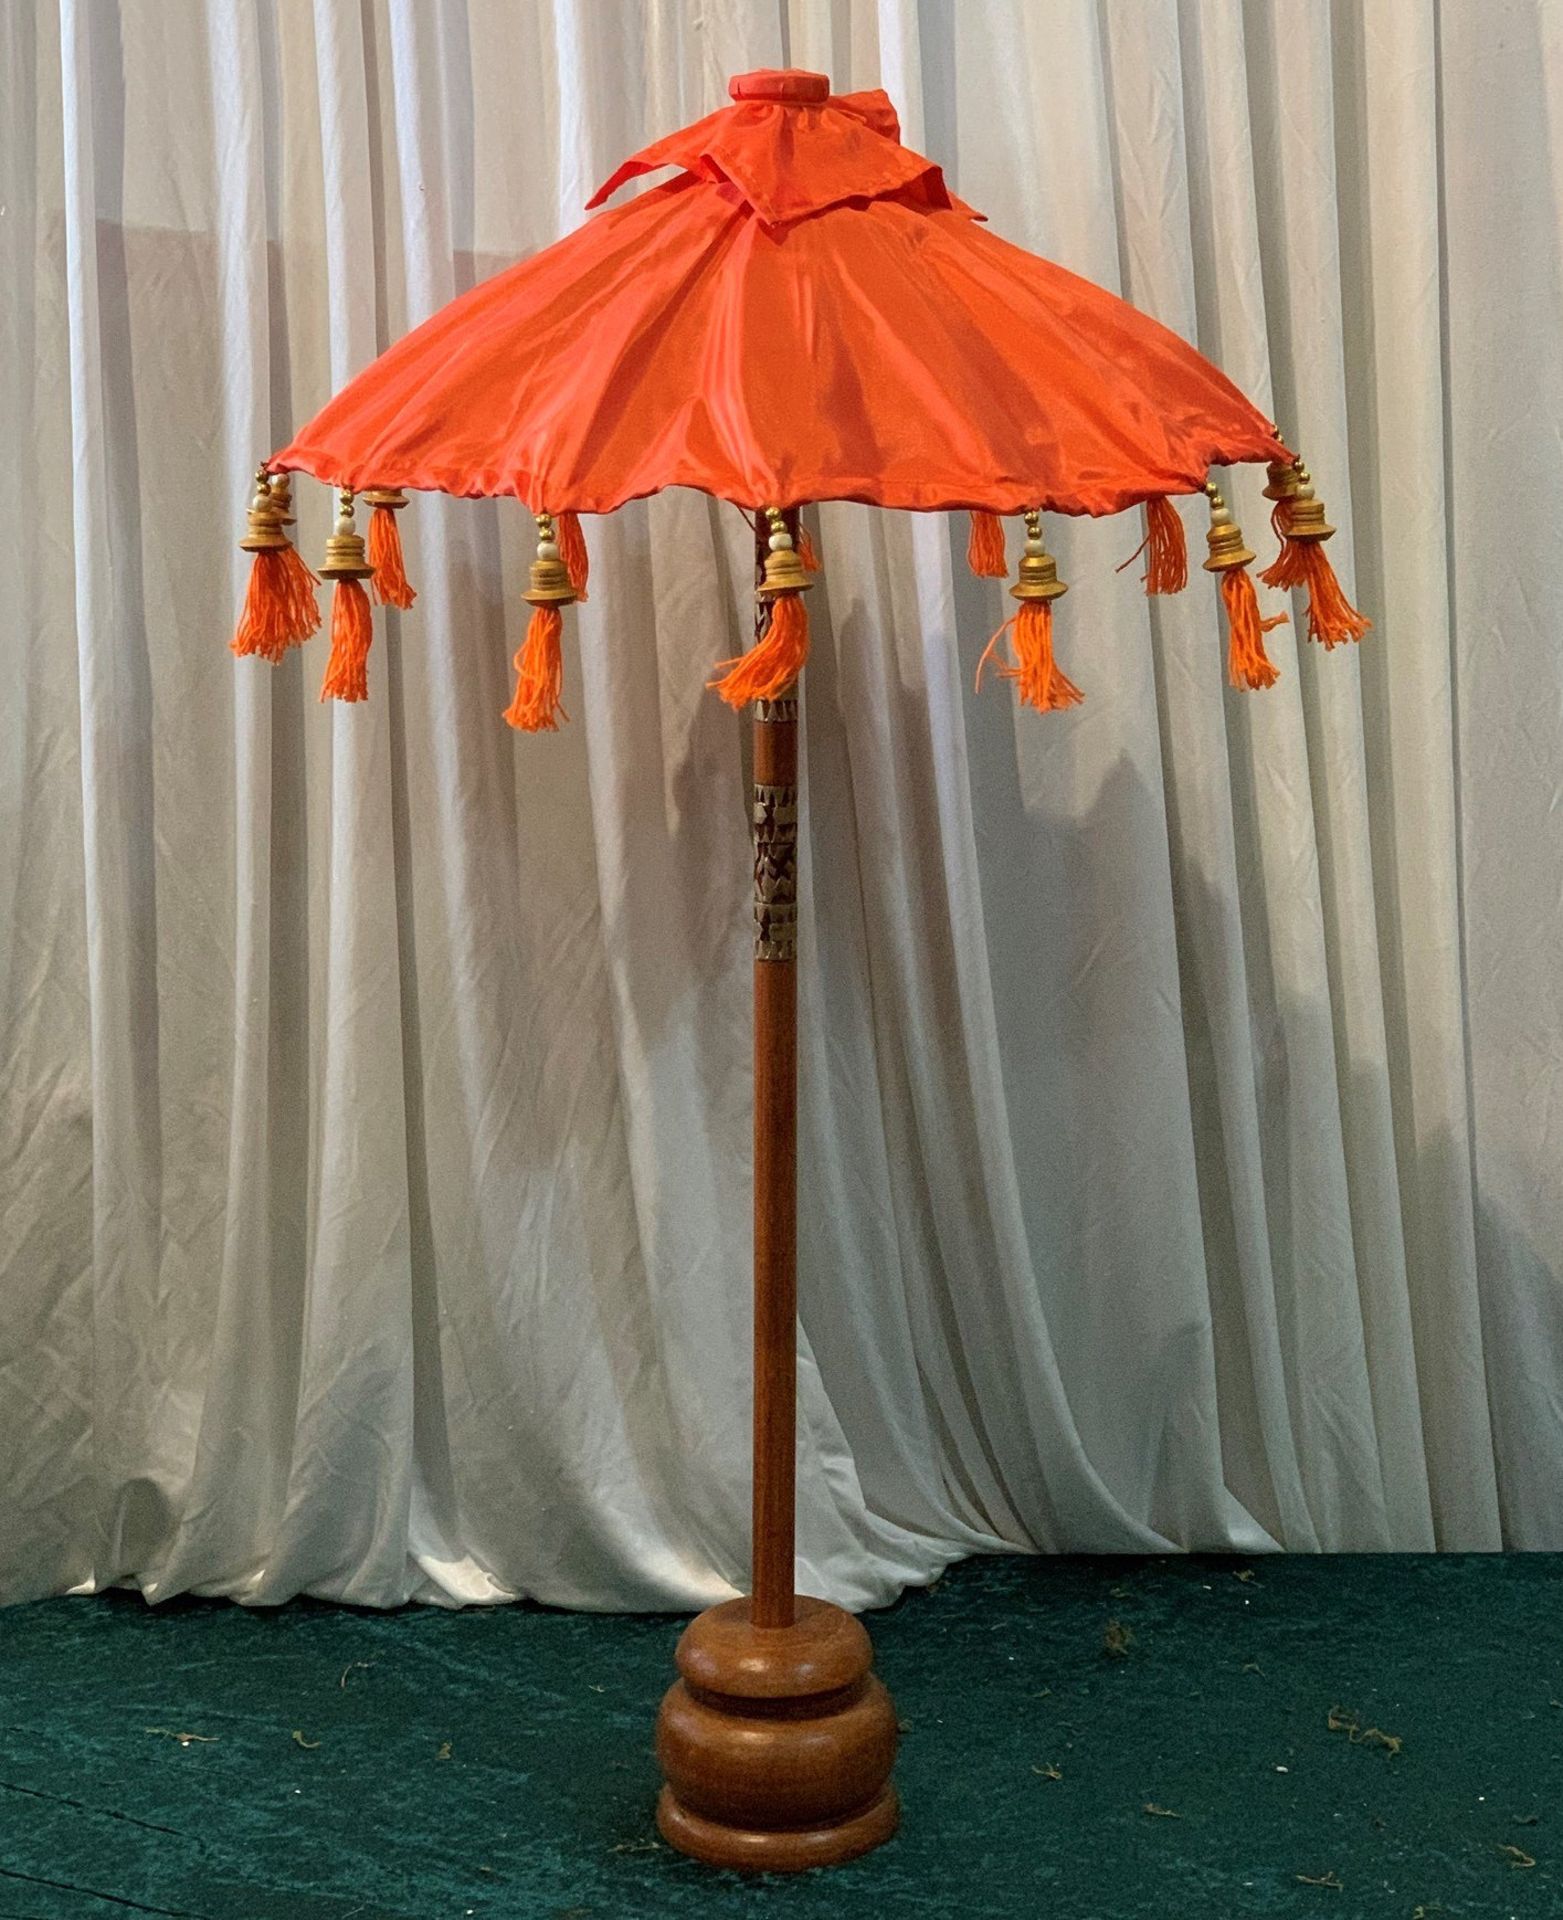 4 x Balinese Umbrellas - Dimensions: 81x48cm - Ref: Lot 85 - CL548 - Location: Near Market